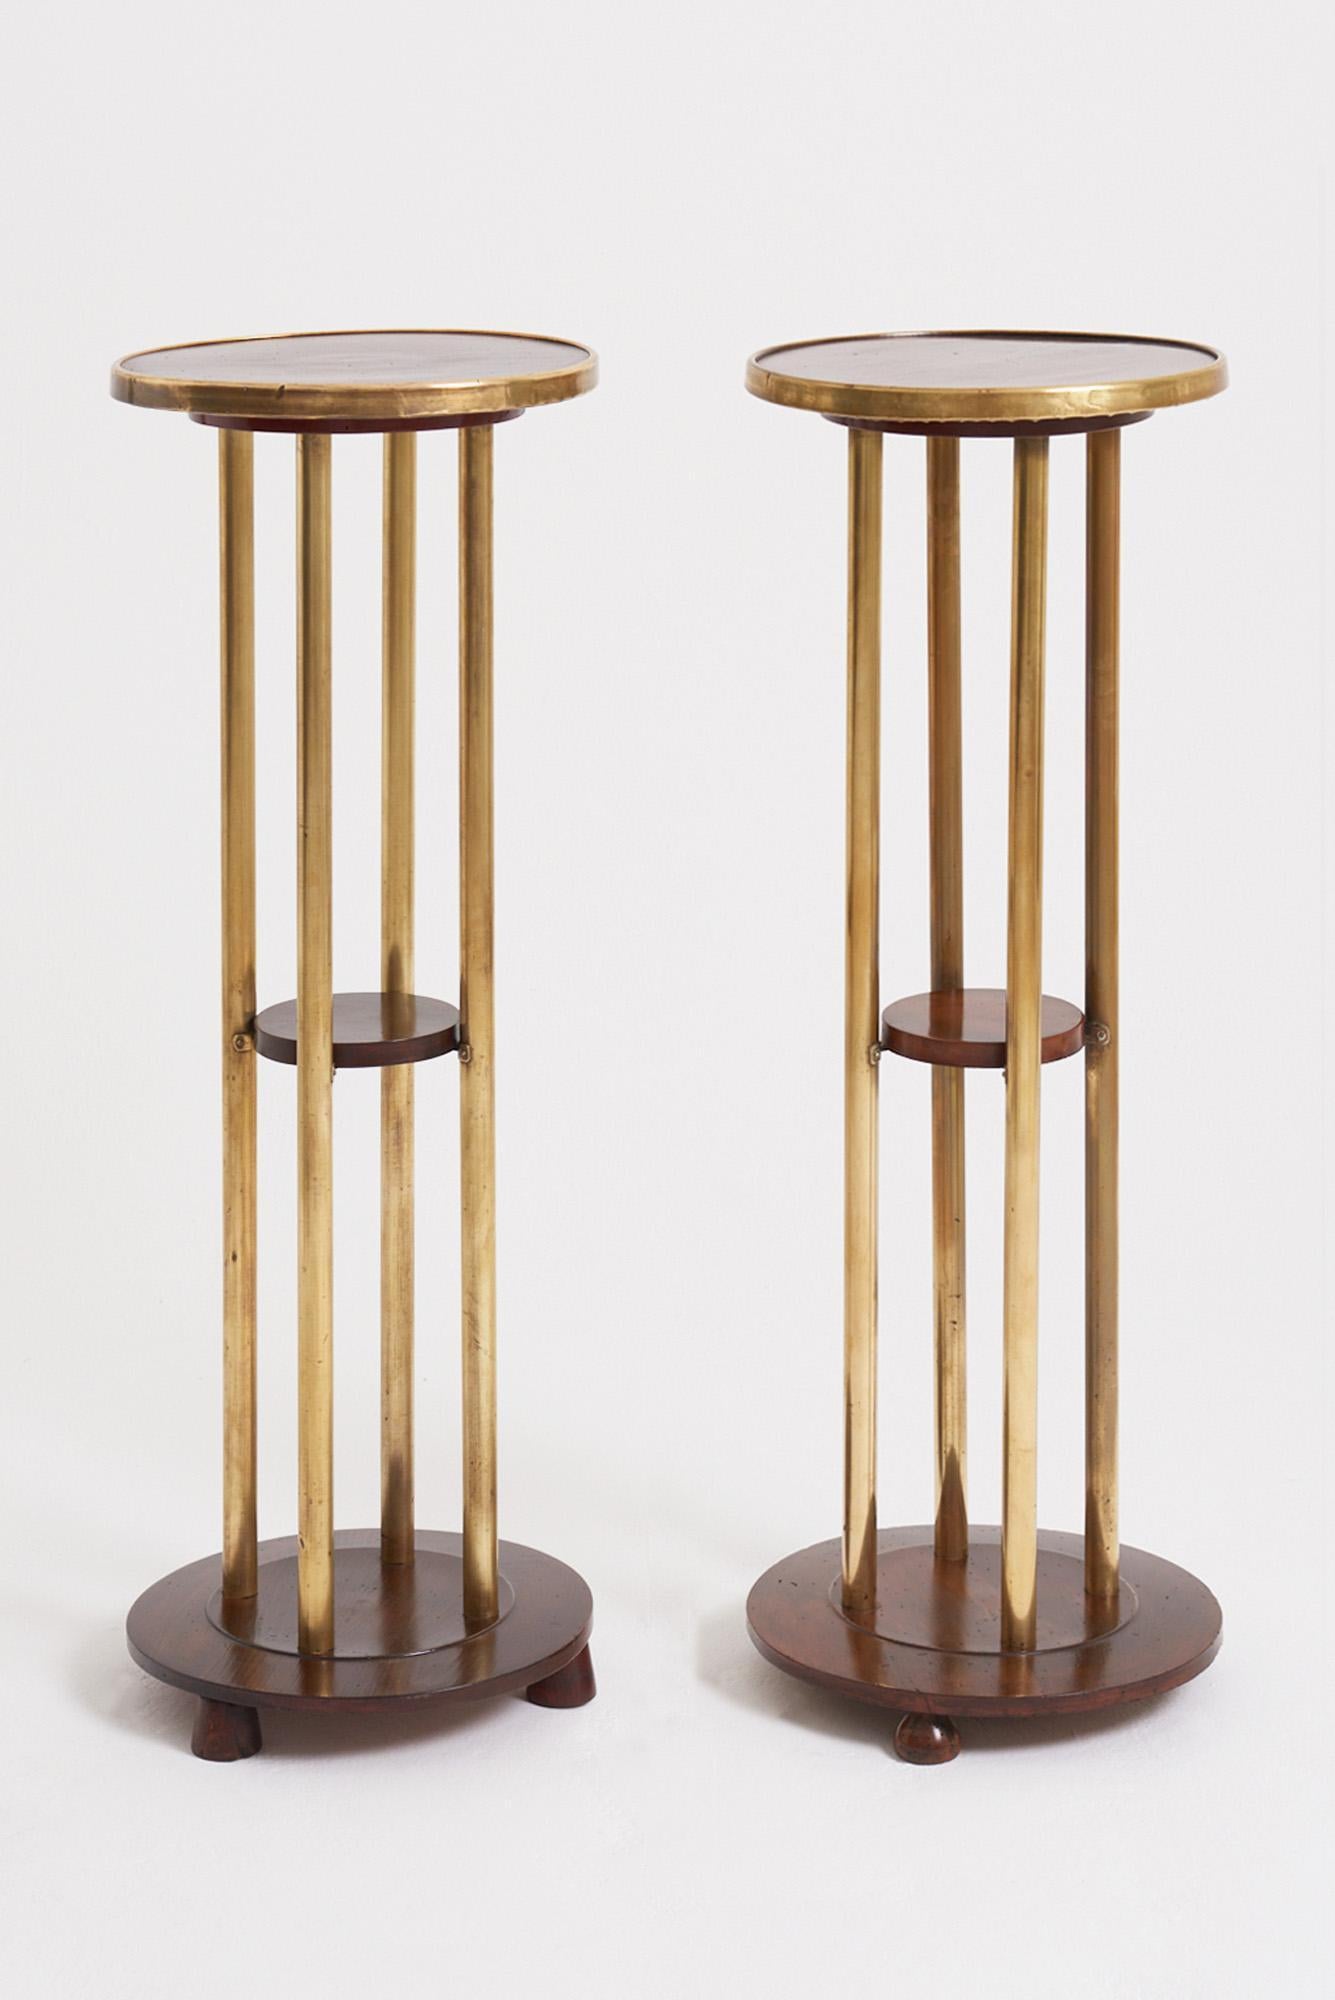 A pair of brass mounted beech pedestals
Northern Europe, possibly Austria, Circa 1910
102 cm high by 40 cm diameter